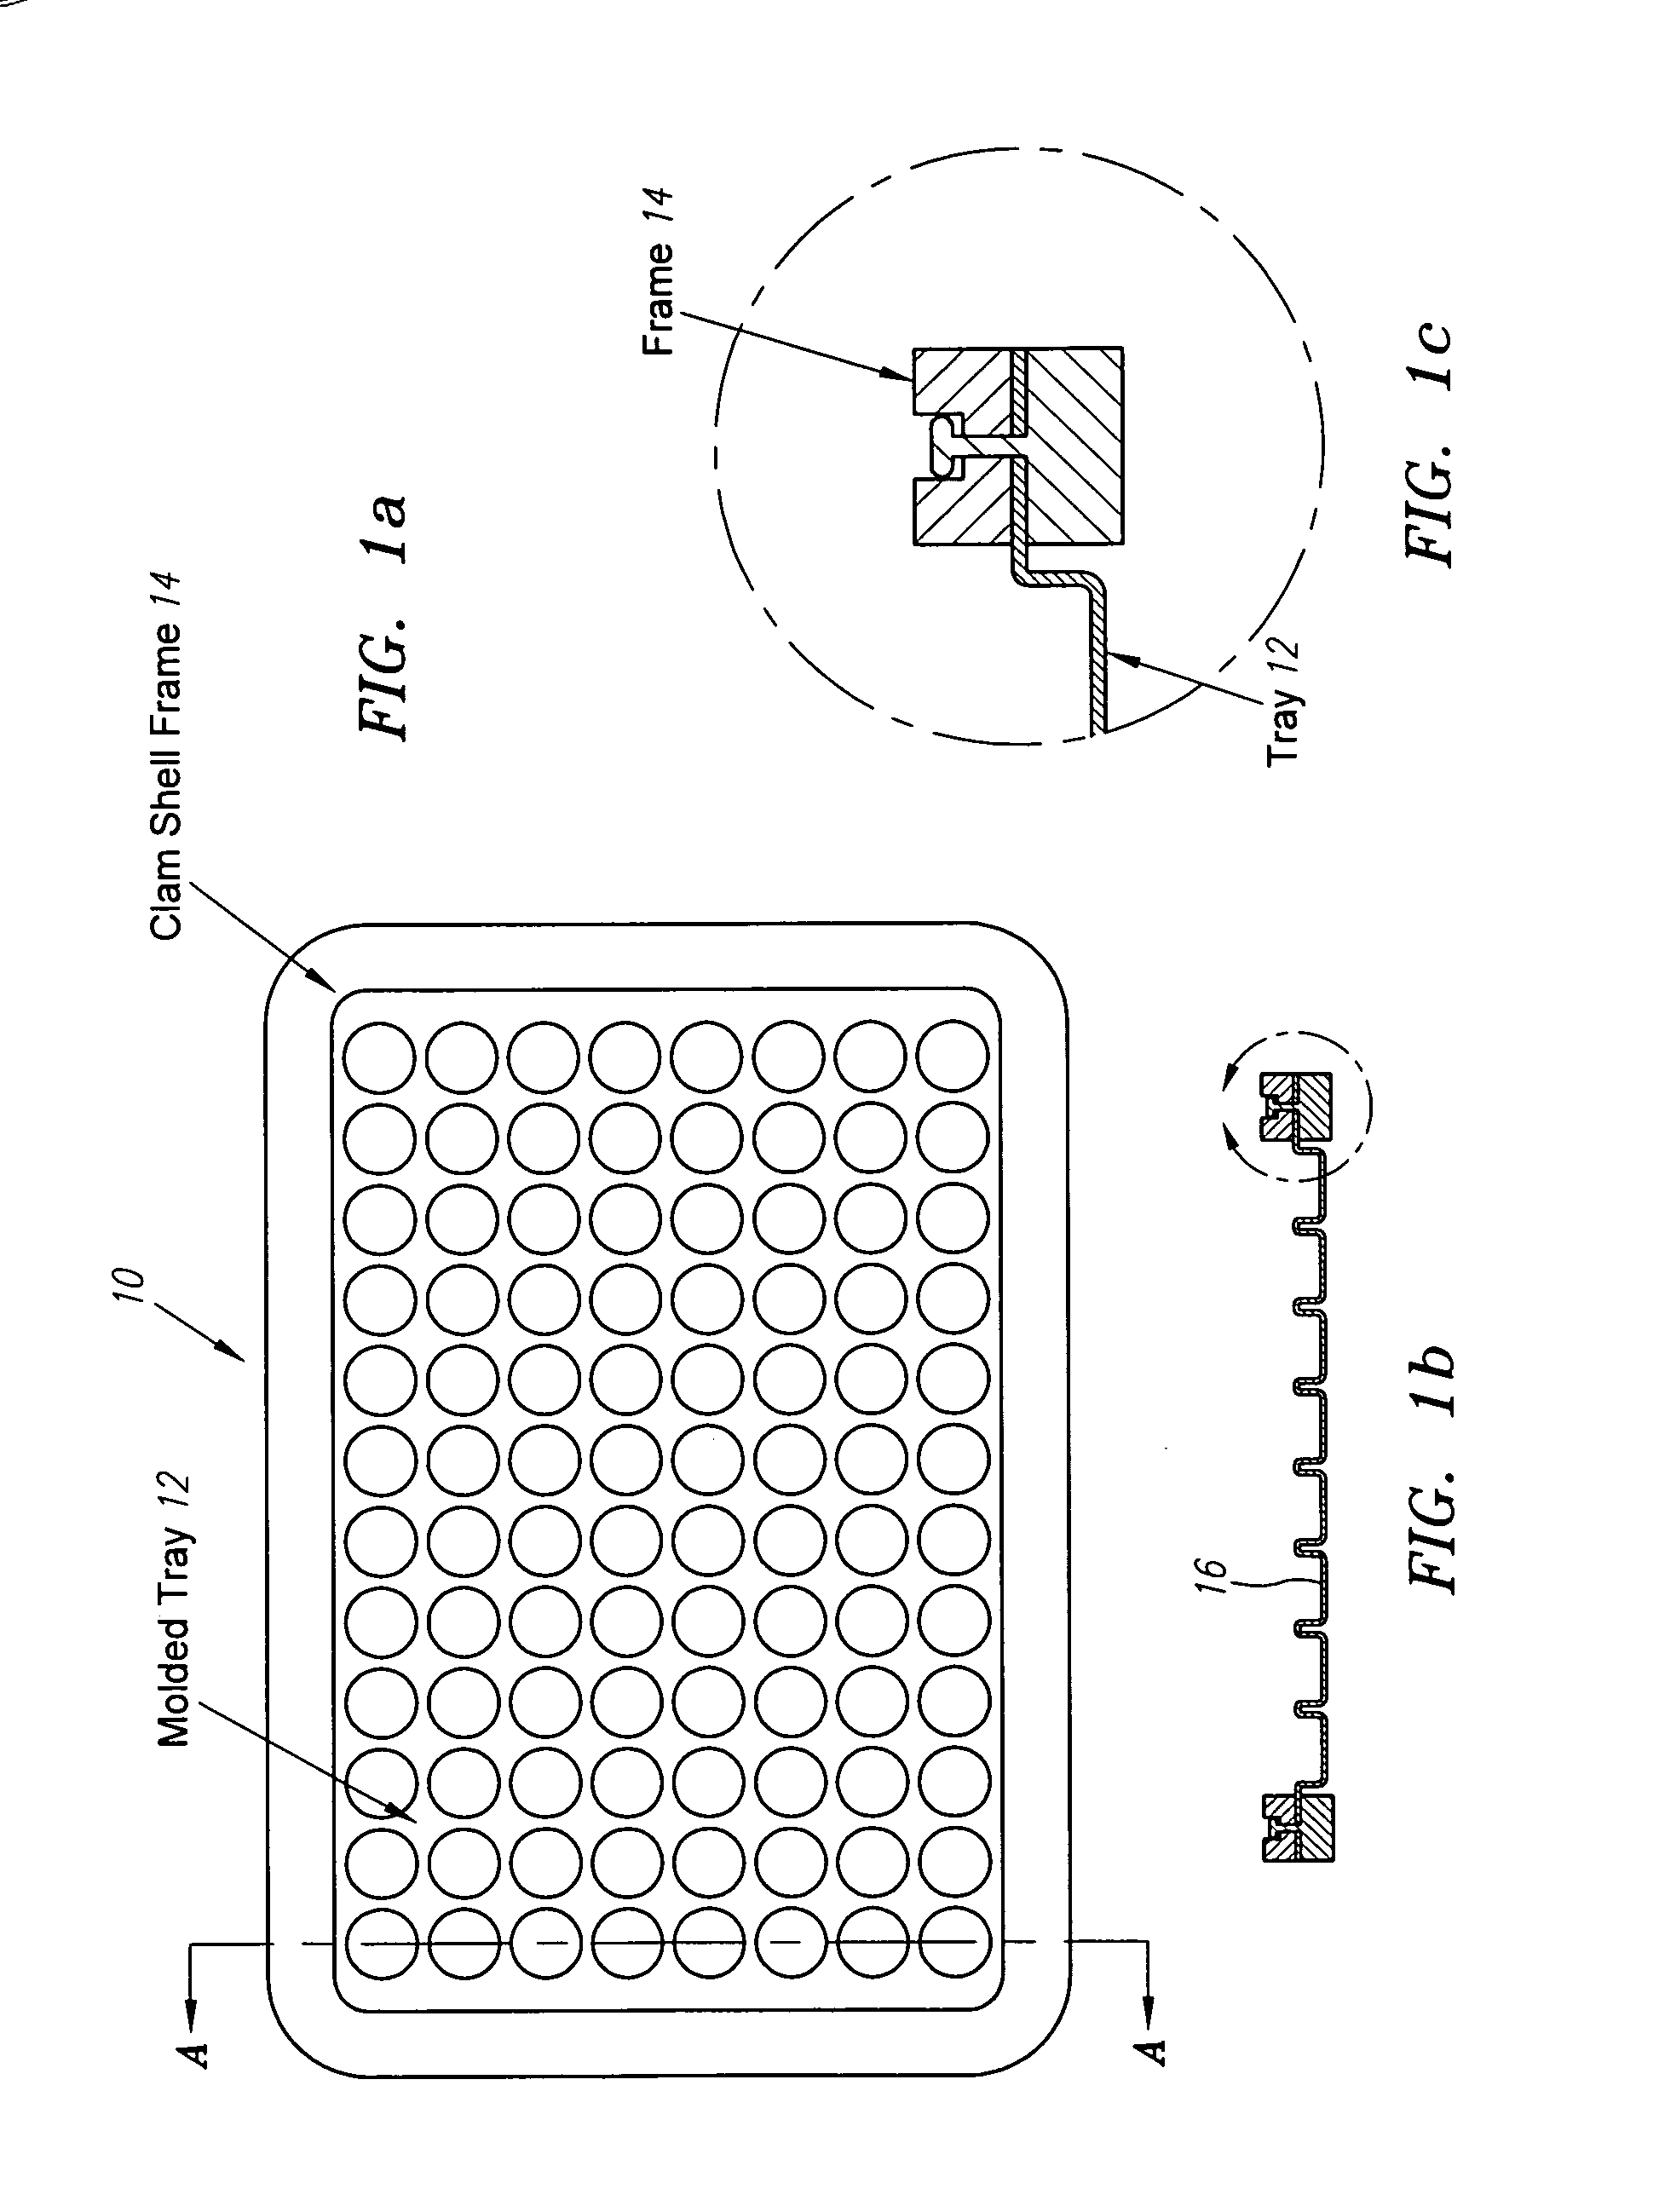 Method and apparatus for processing biomolecule arrays